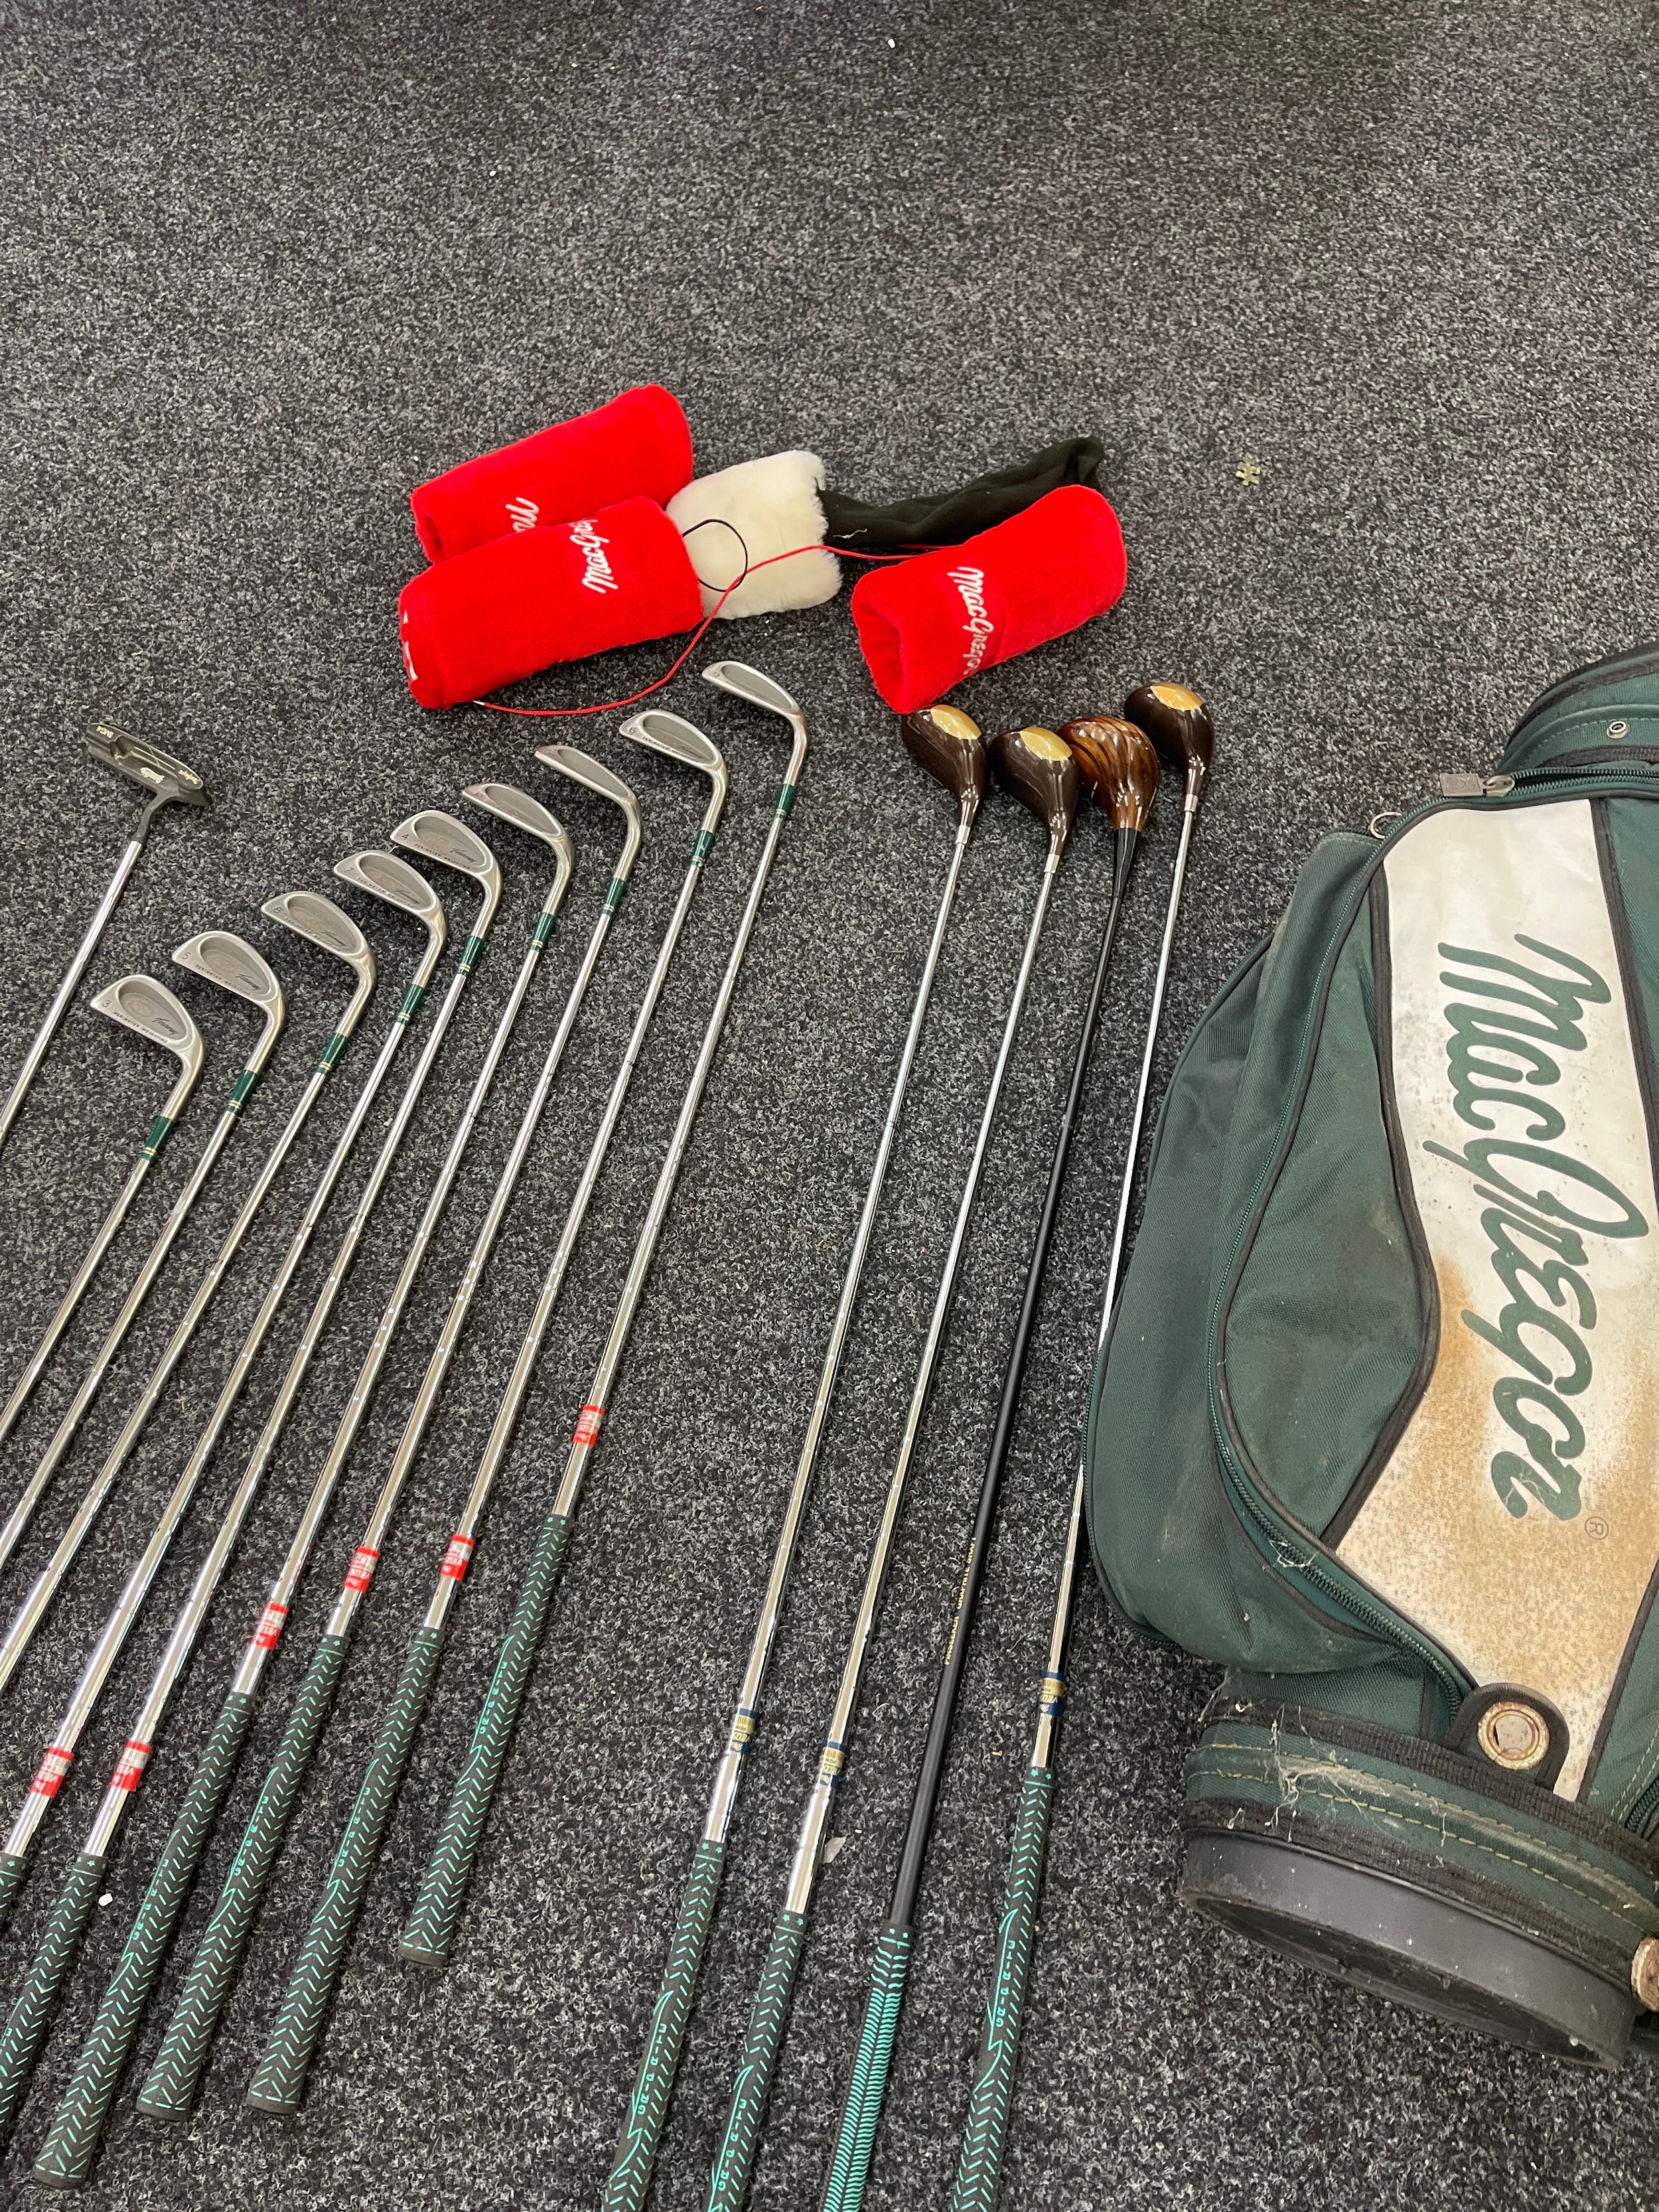 Set of Mcgregor golf clubs and Dinseeker wood bag - Bild 2 aus 4